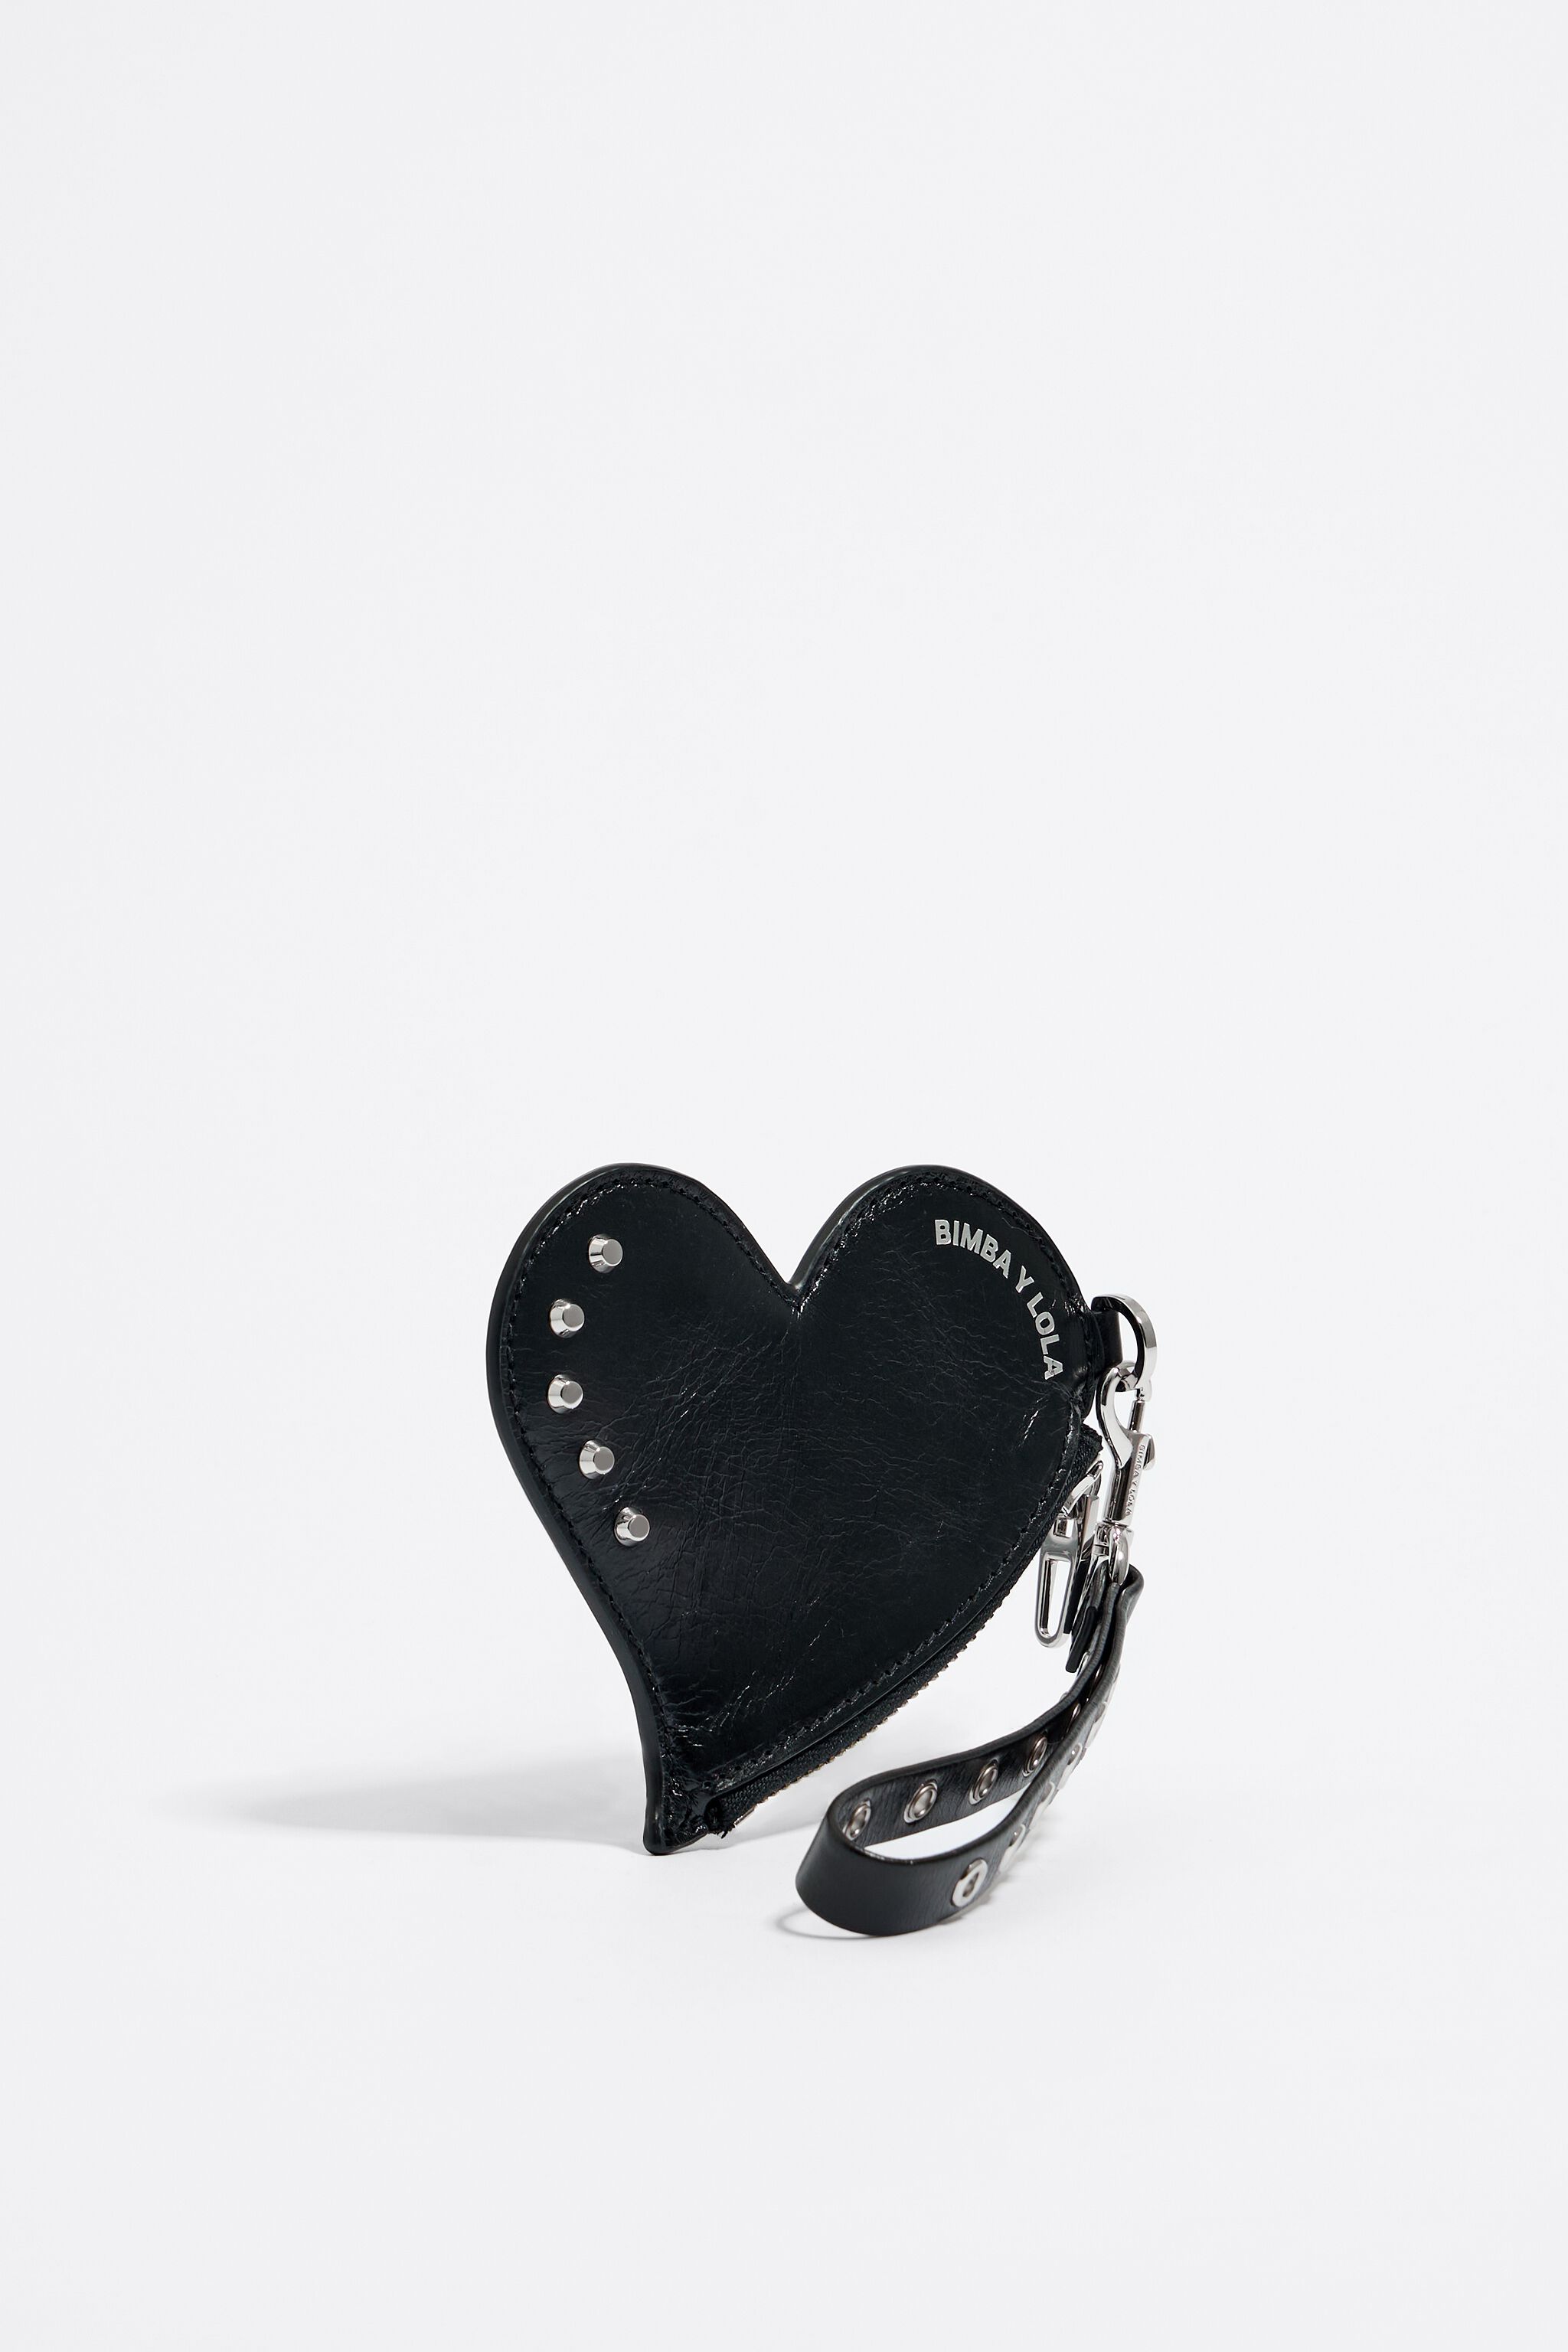 Laminated Caroline divisible heart coin purse black | Make your own item |  O bag